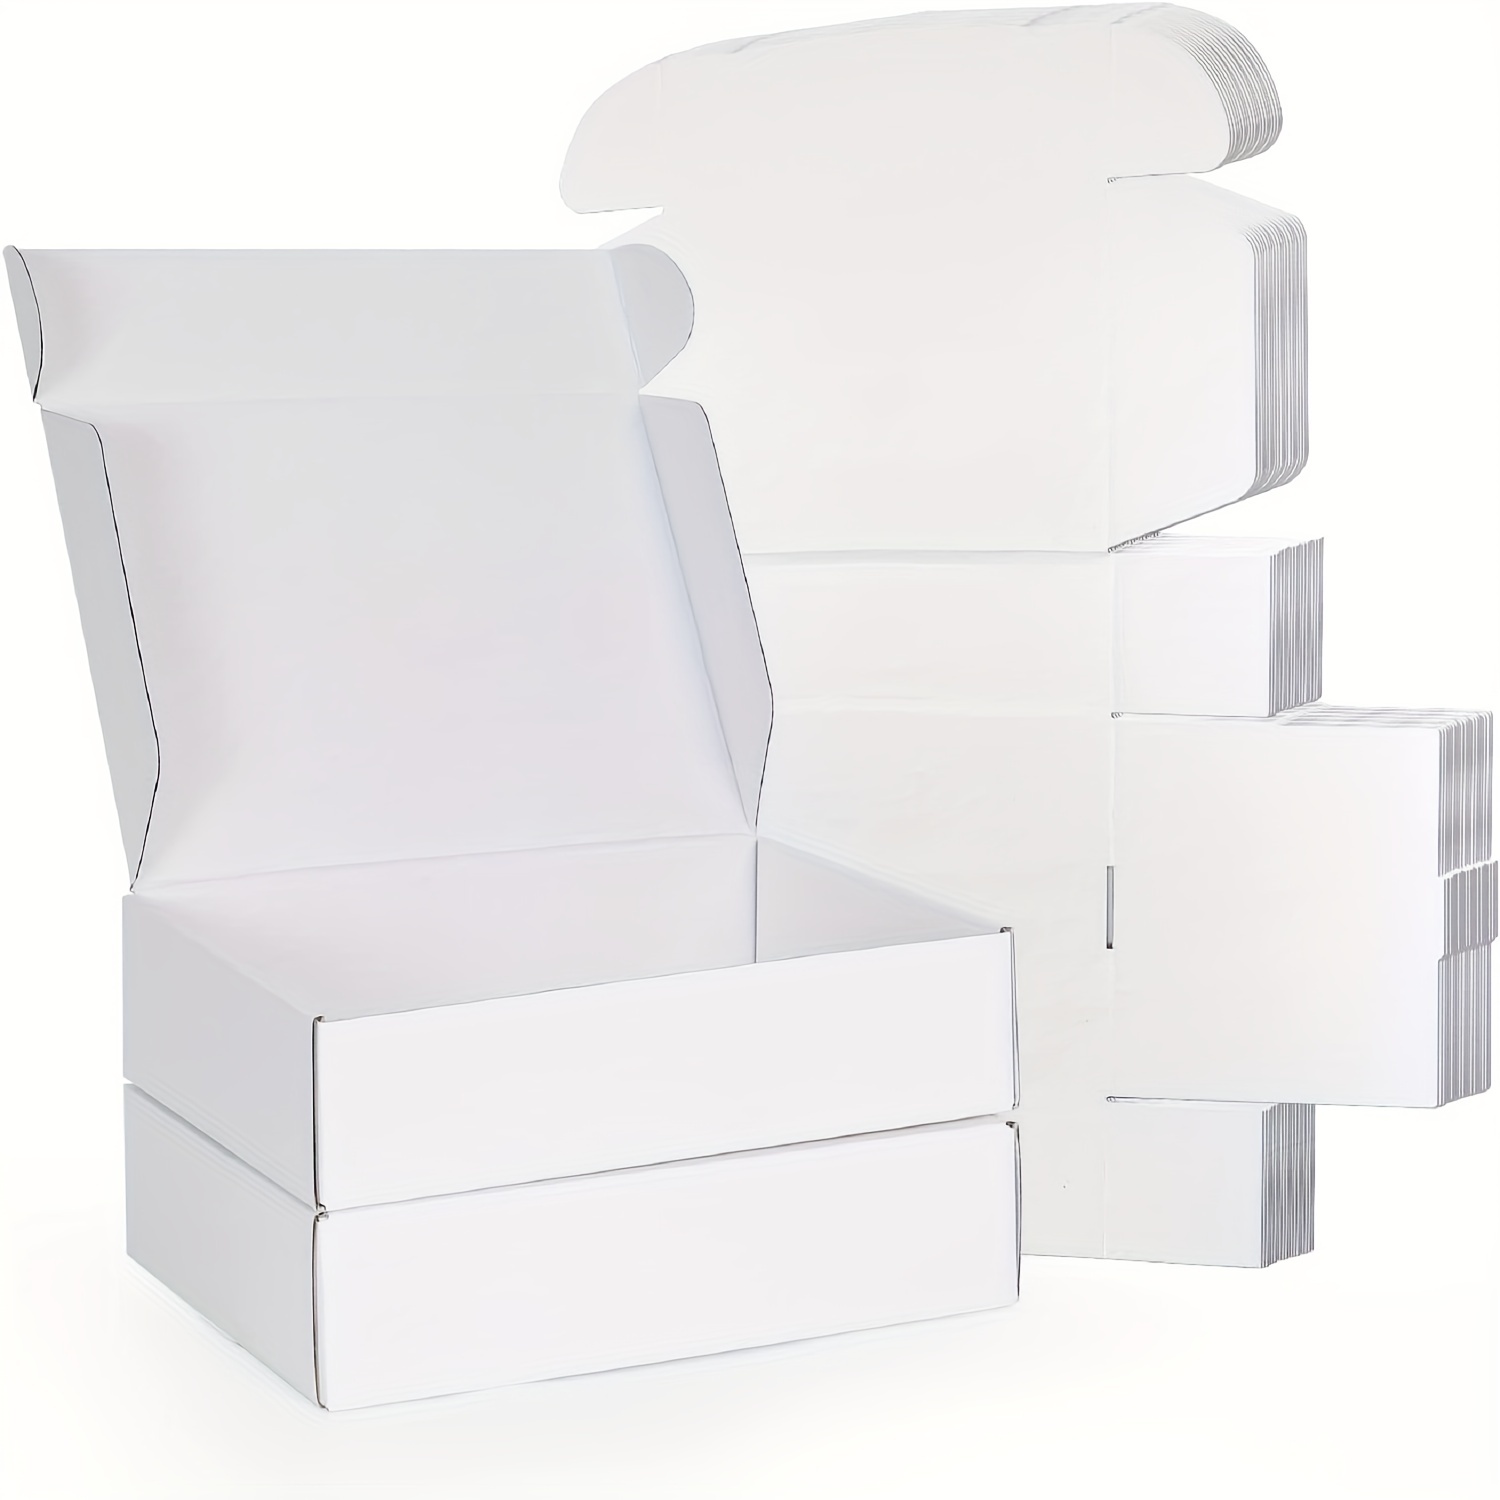 RLAVBL Cajas de envío 9 x 6 x 2 pulgadas caja pequeña de cartón